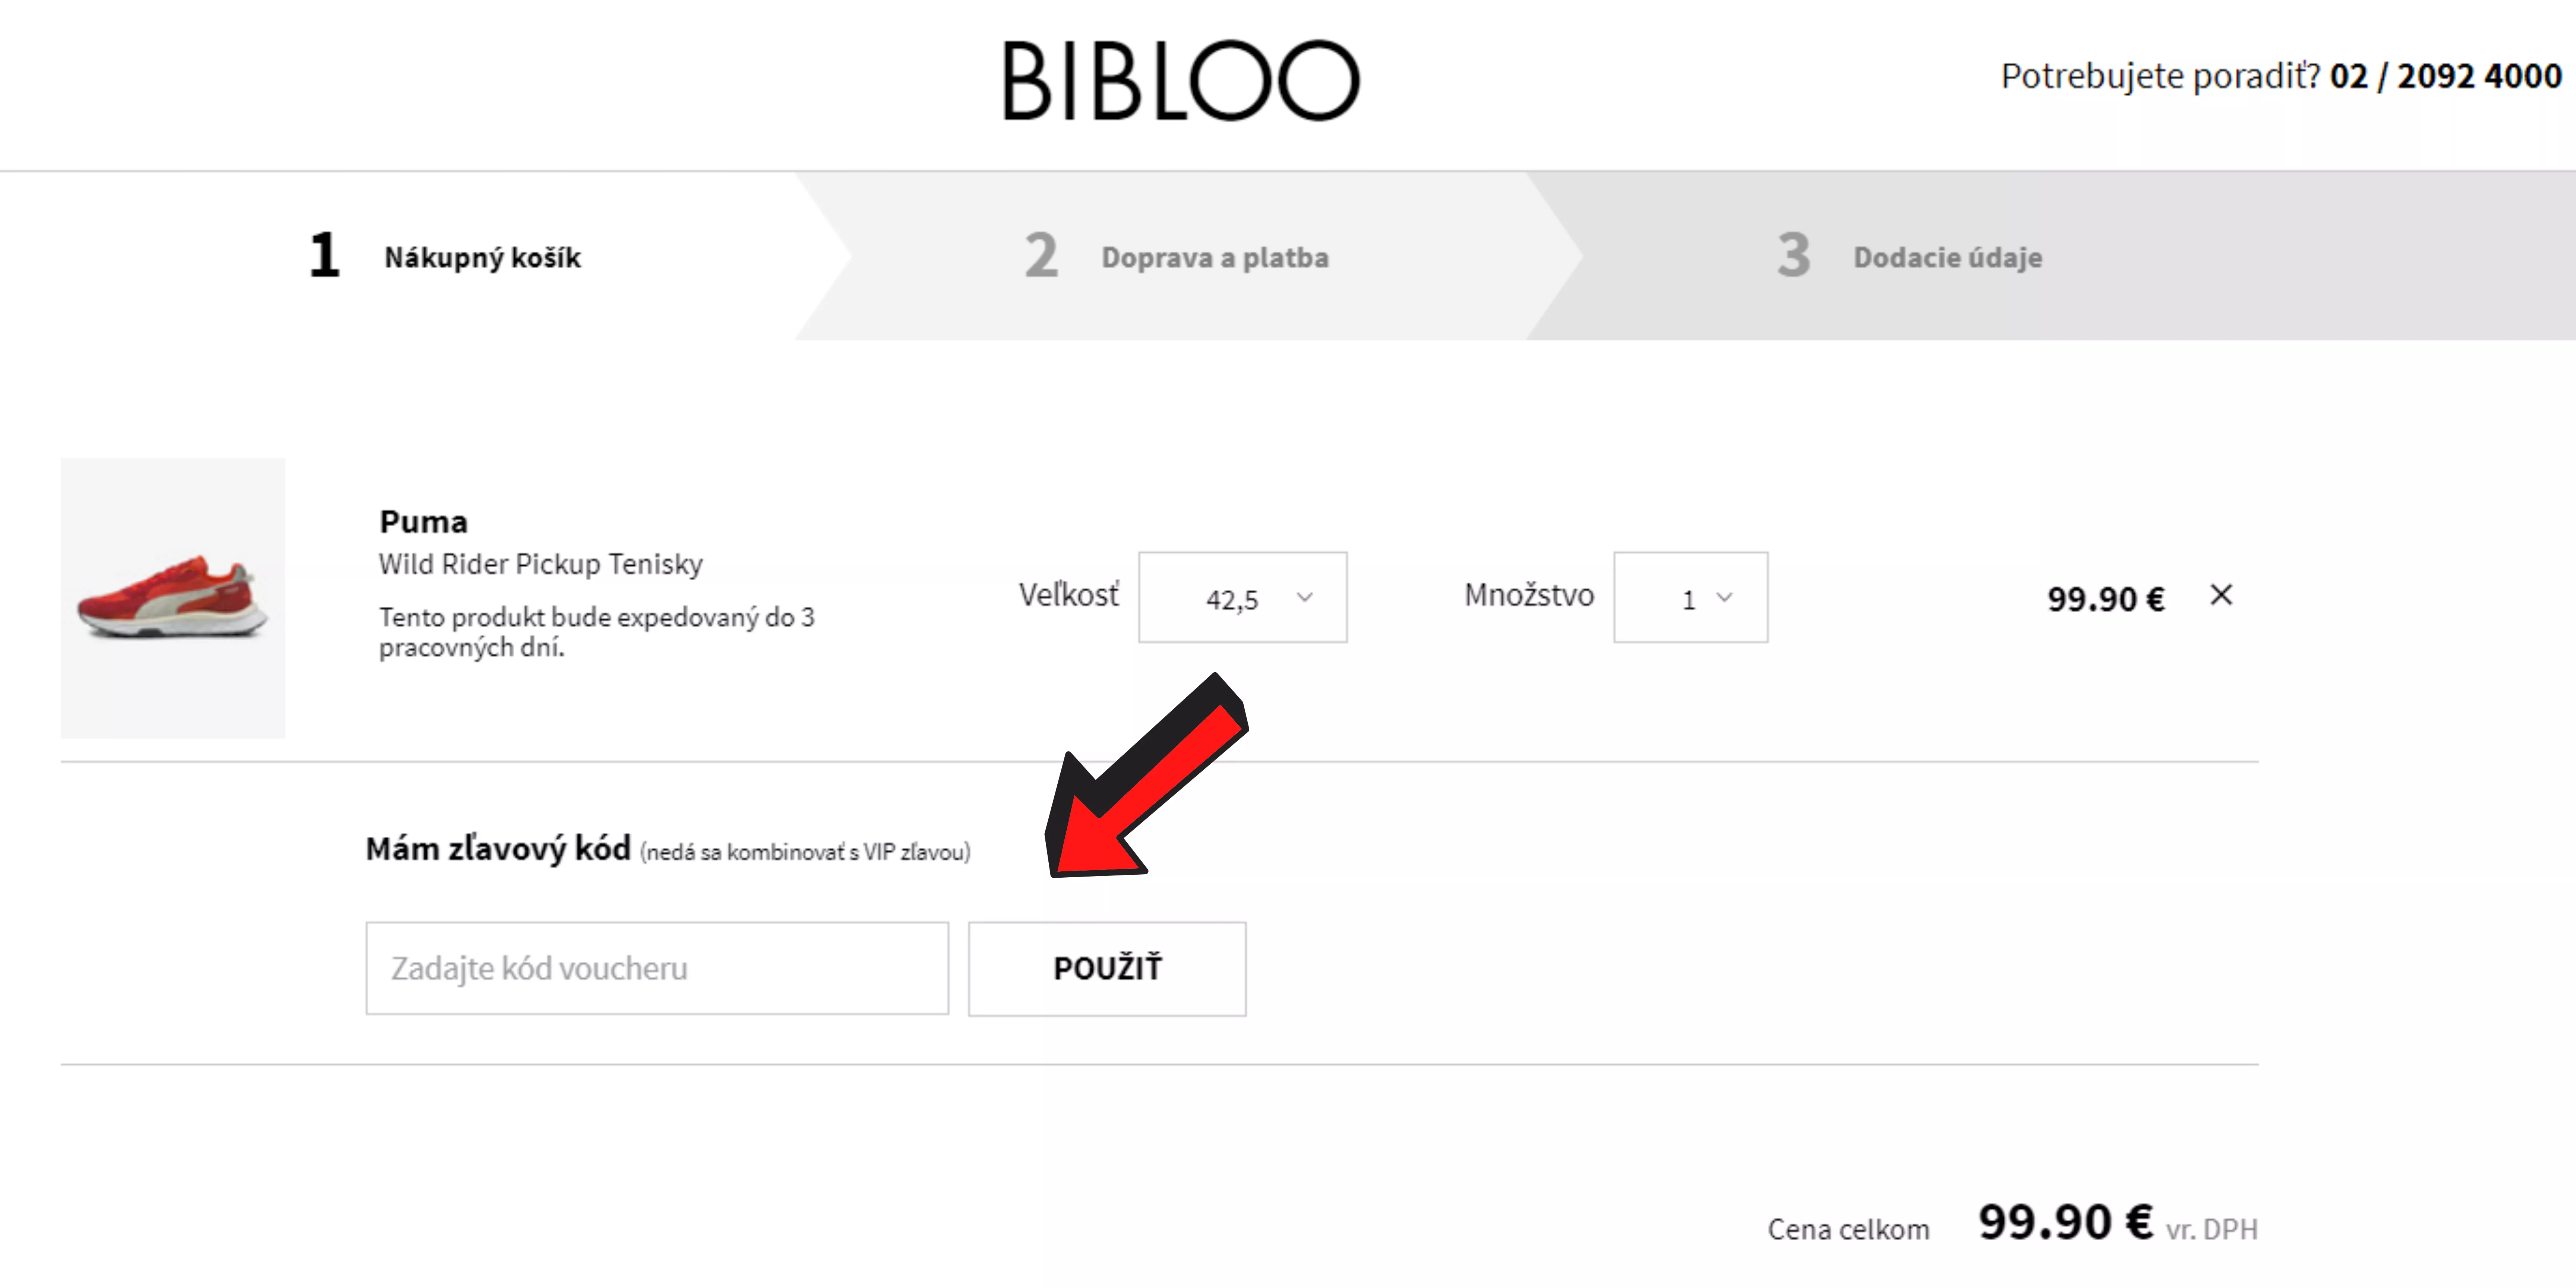 Bibloo.sk - zľavový kupón